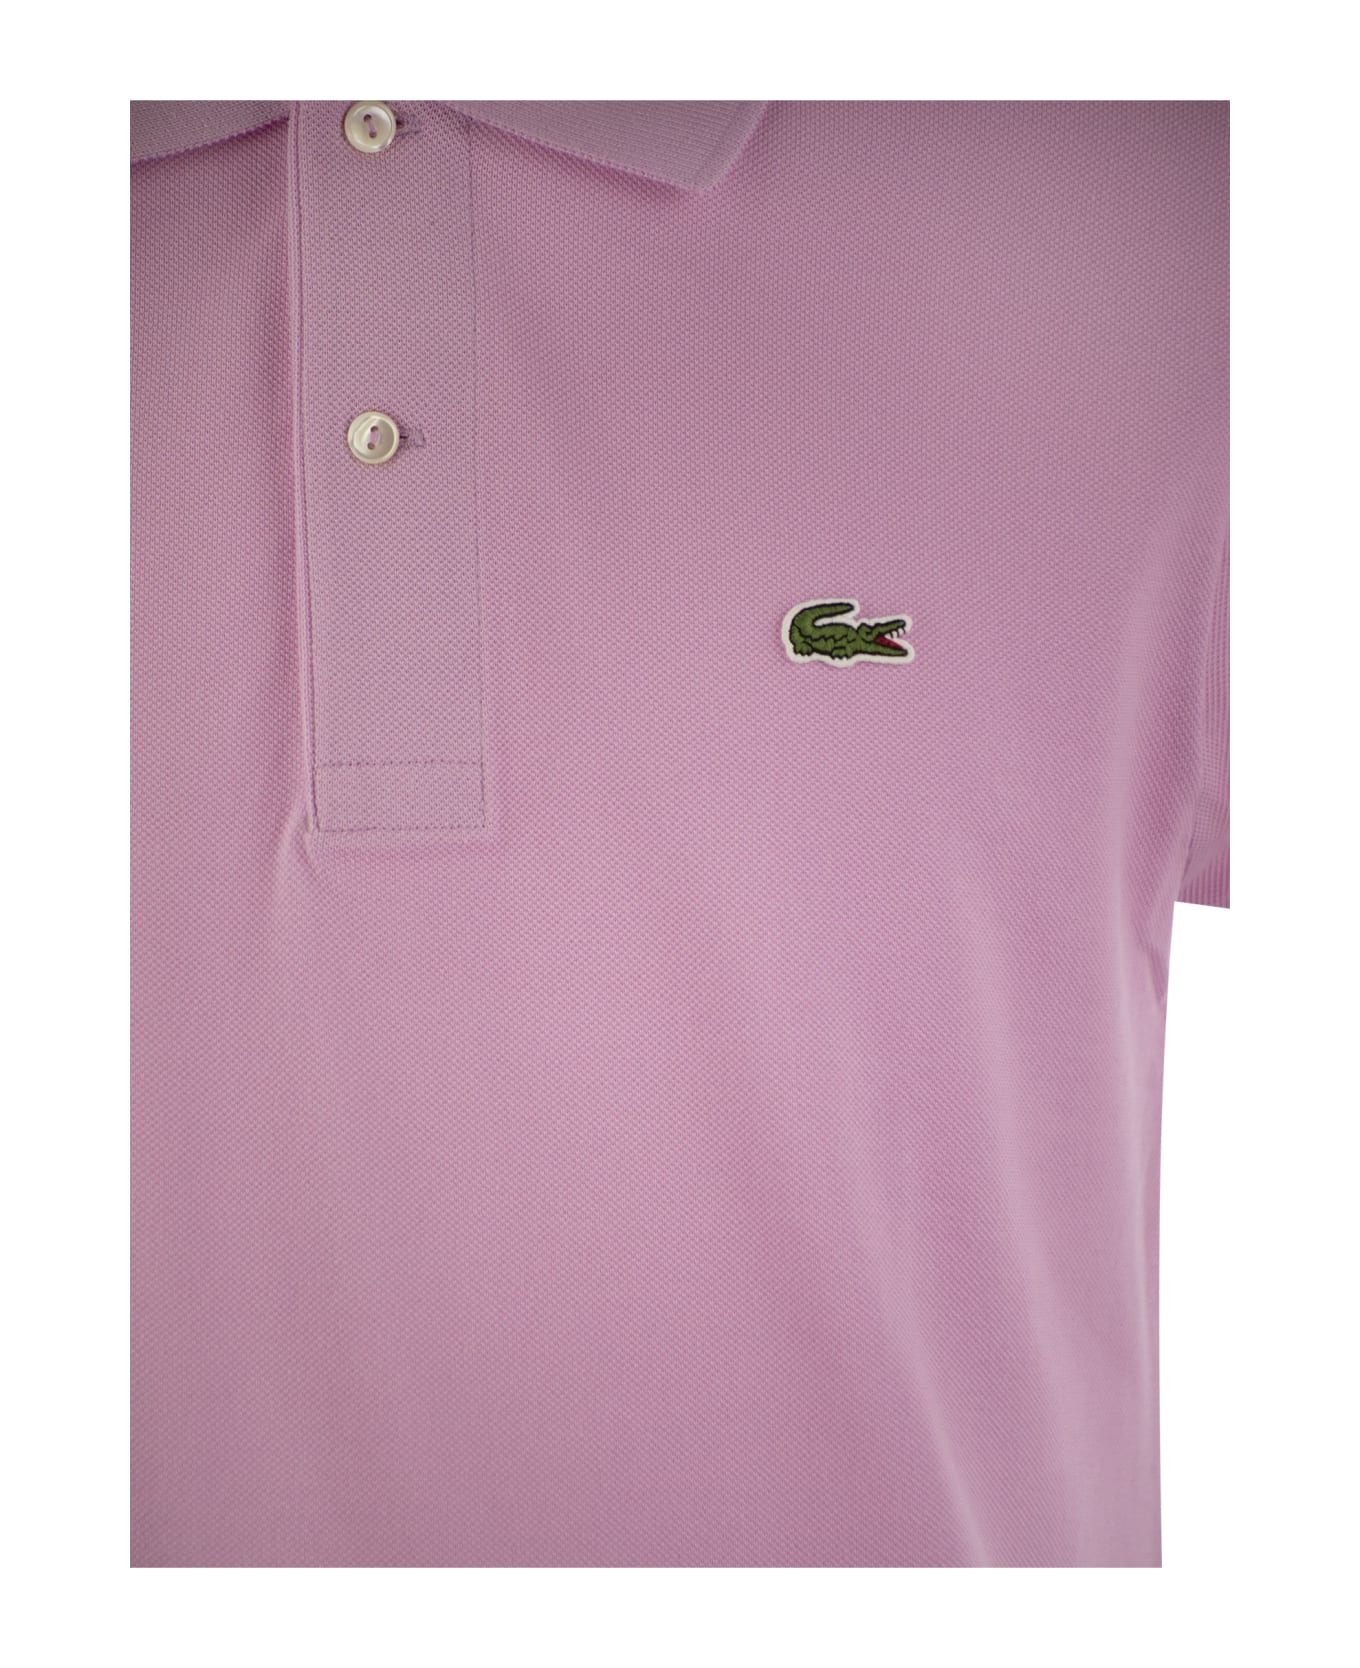 Lacoste Classic Fit Cotton Pique Polo Shirt - Glicine